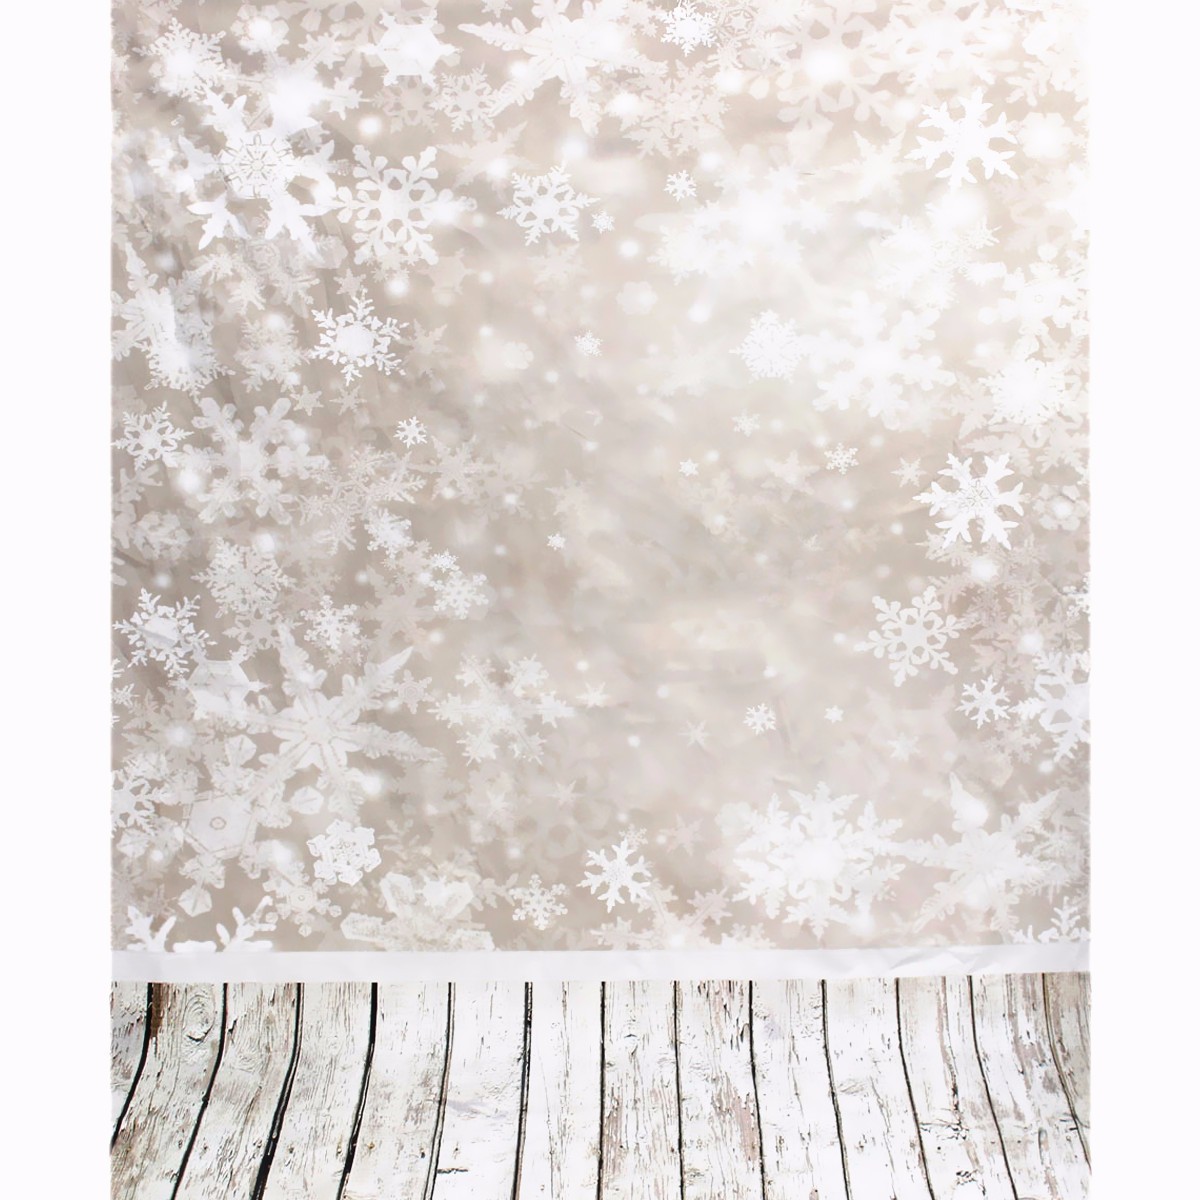 15x21m-Photography-Vinyl-Background-Snow-Scenery-Snowy-Shading-Halo-Christmas-1130342-2